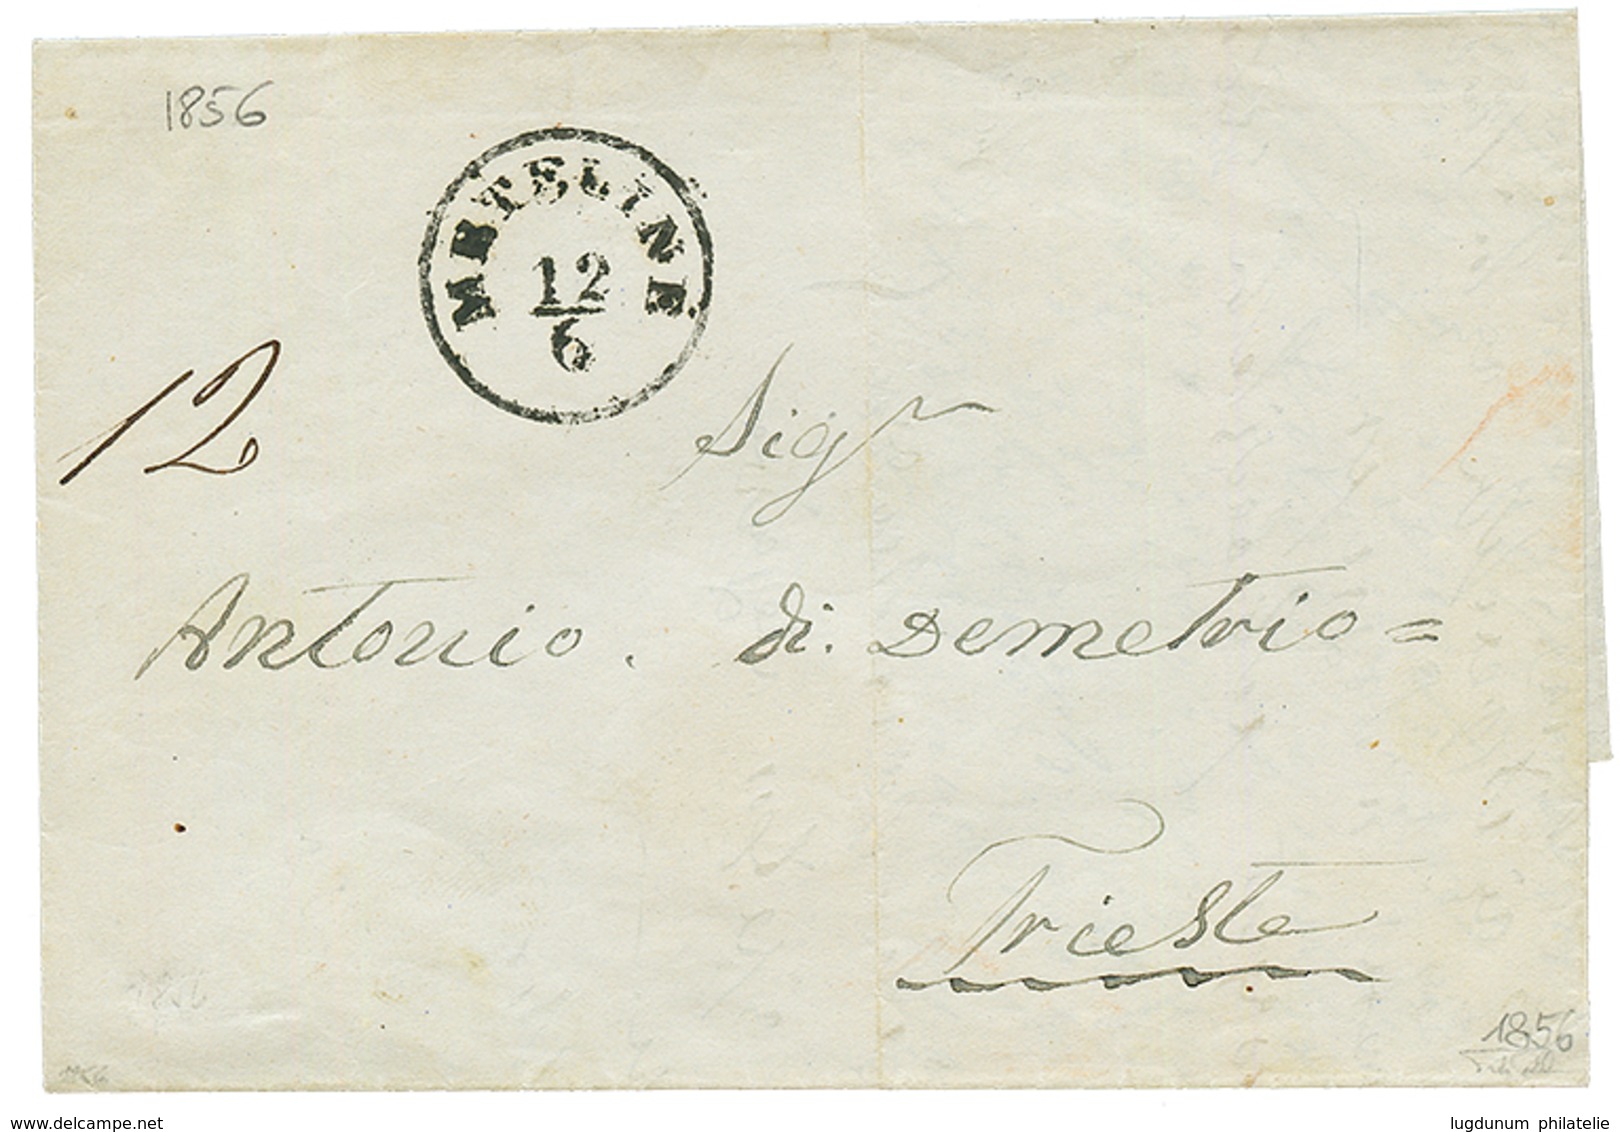 METELINE : 1856 METELINE + "12" Tax Marking On Cover To TRIESTE. Superb. - Eastern Austria